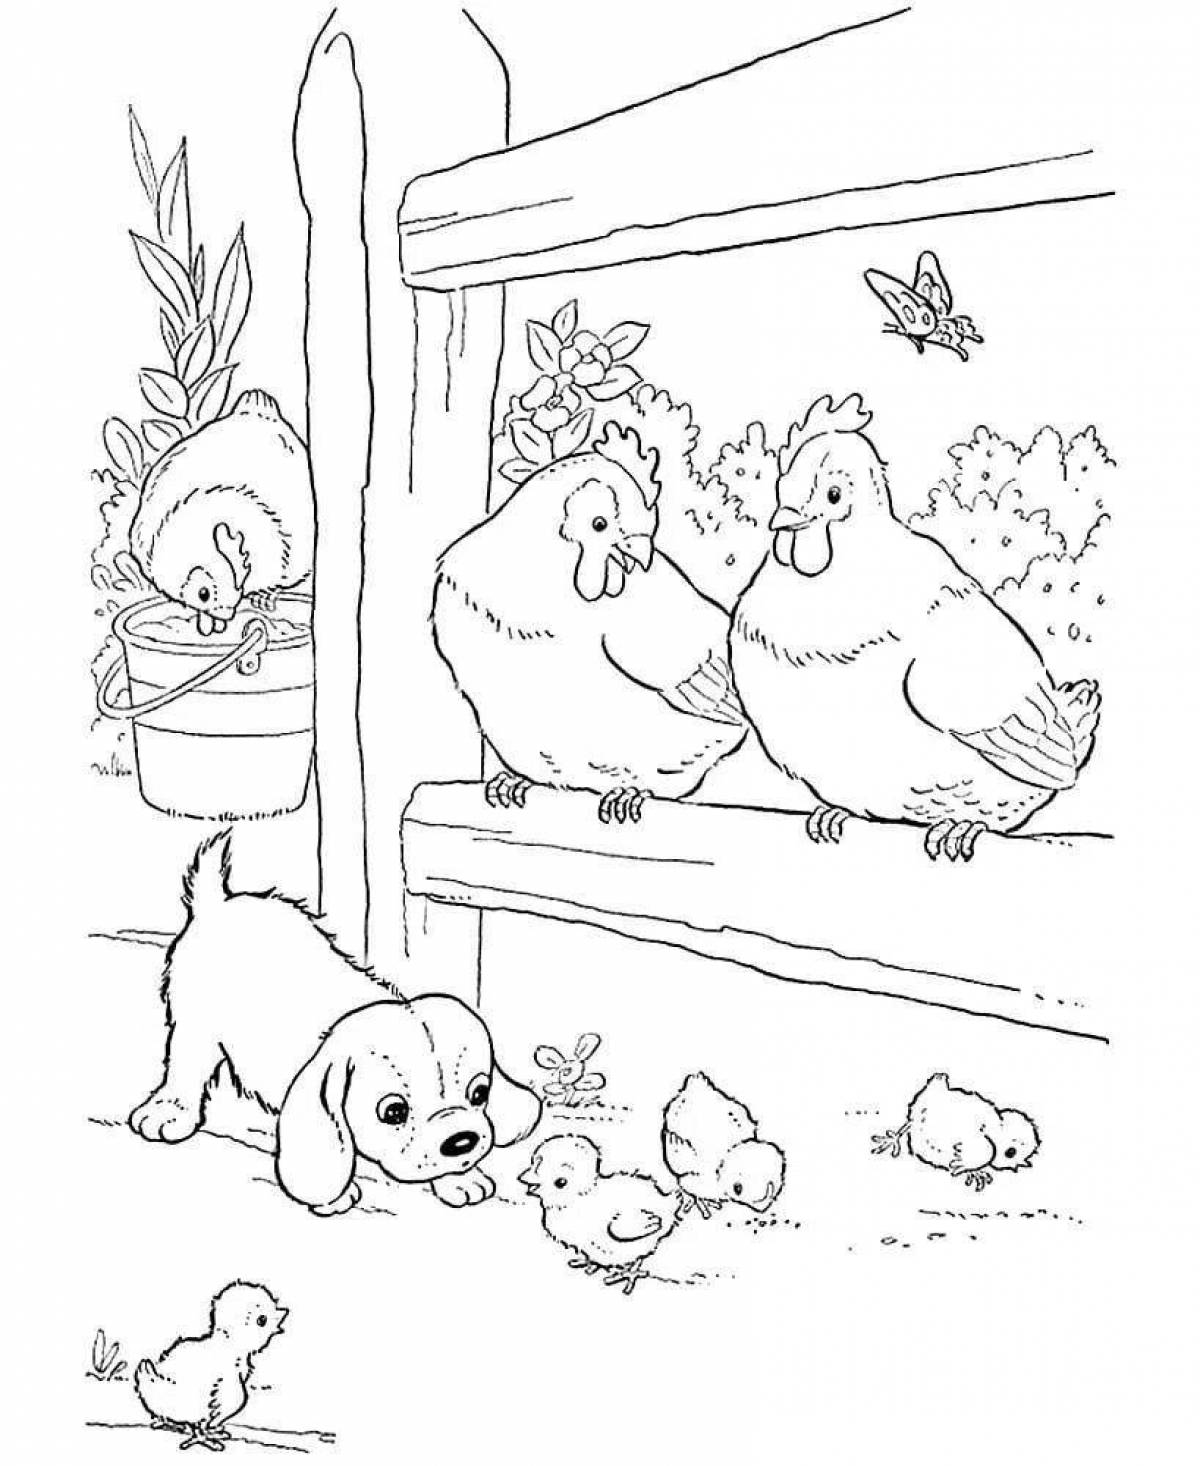 Bright chicken coop coloring page